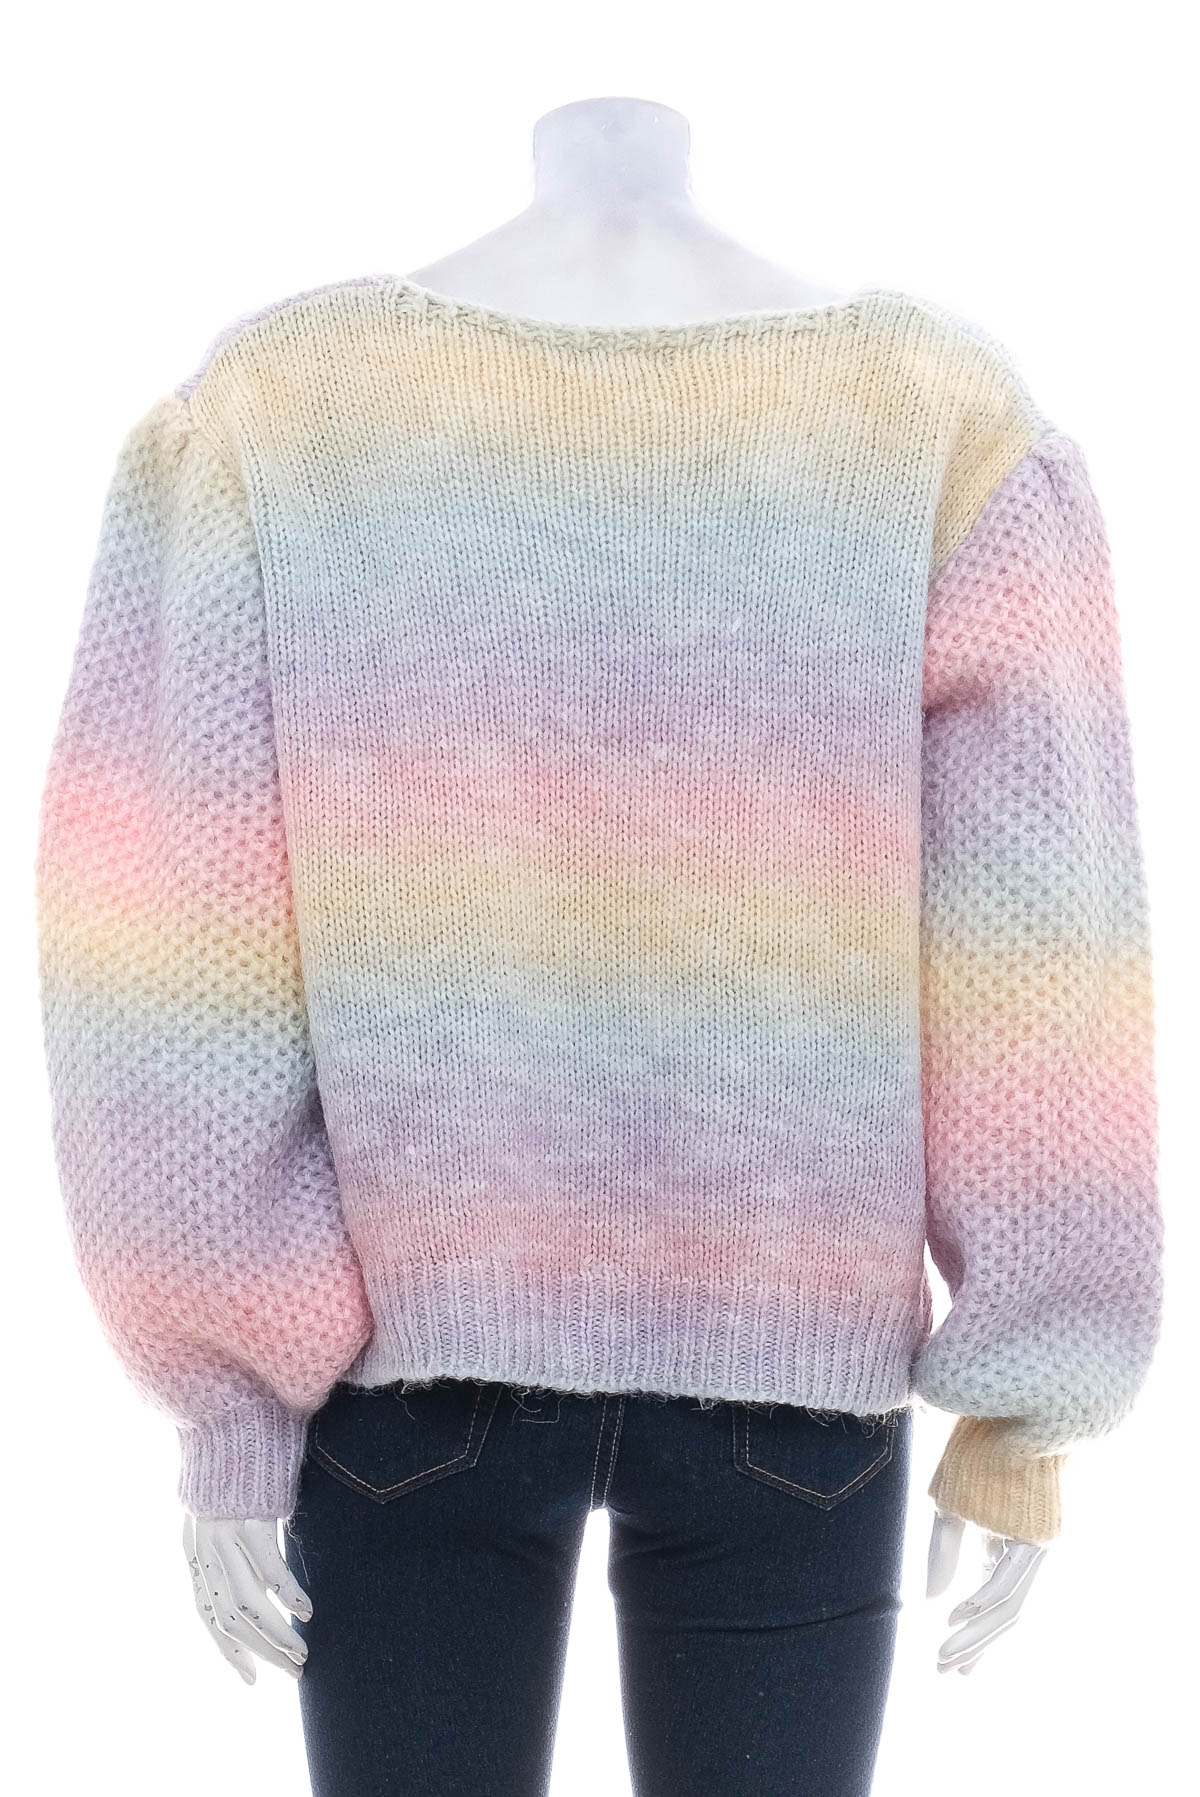 Women's sweater - Boohoo - 1